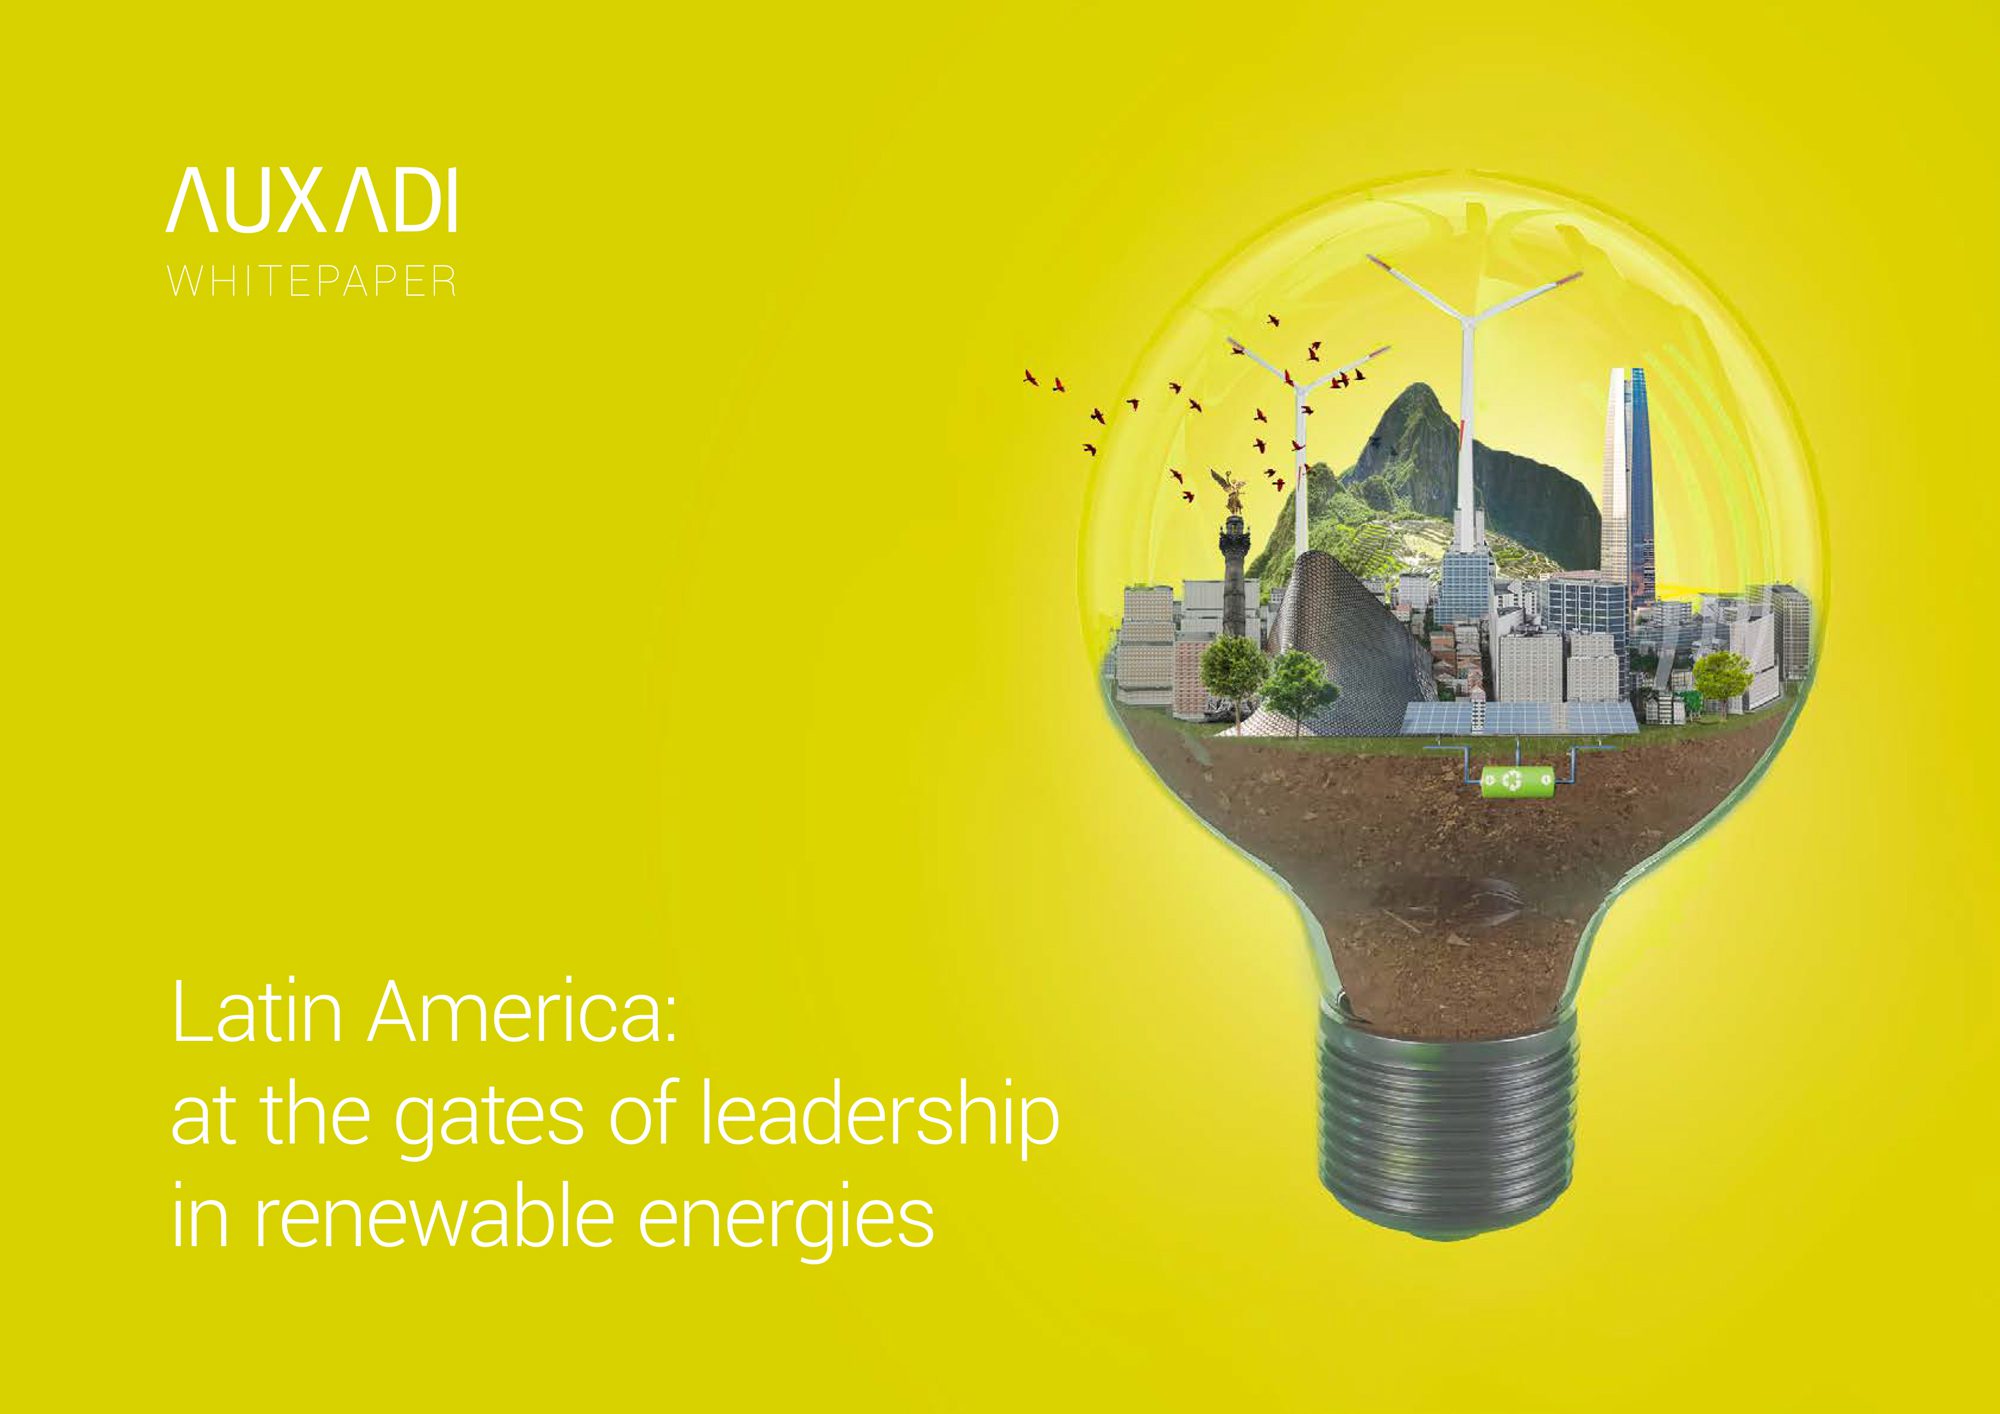 Latin America at the gates of leadership in renewable energies